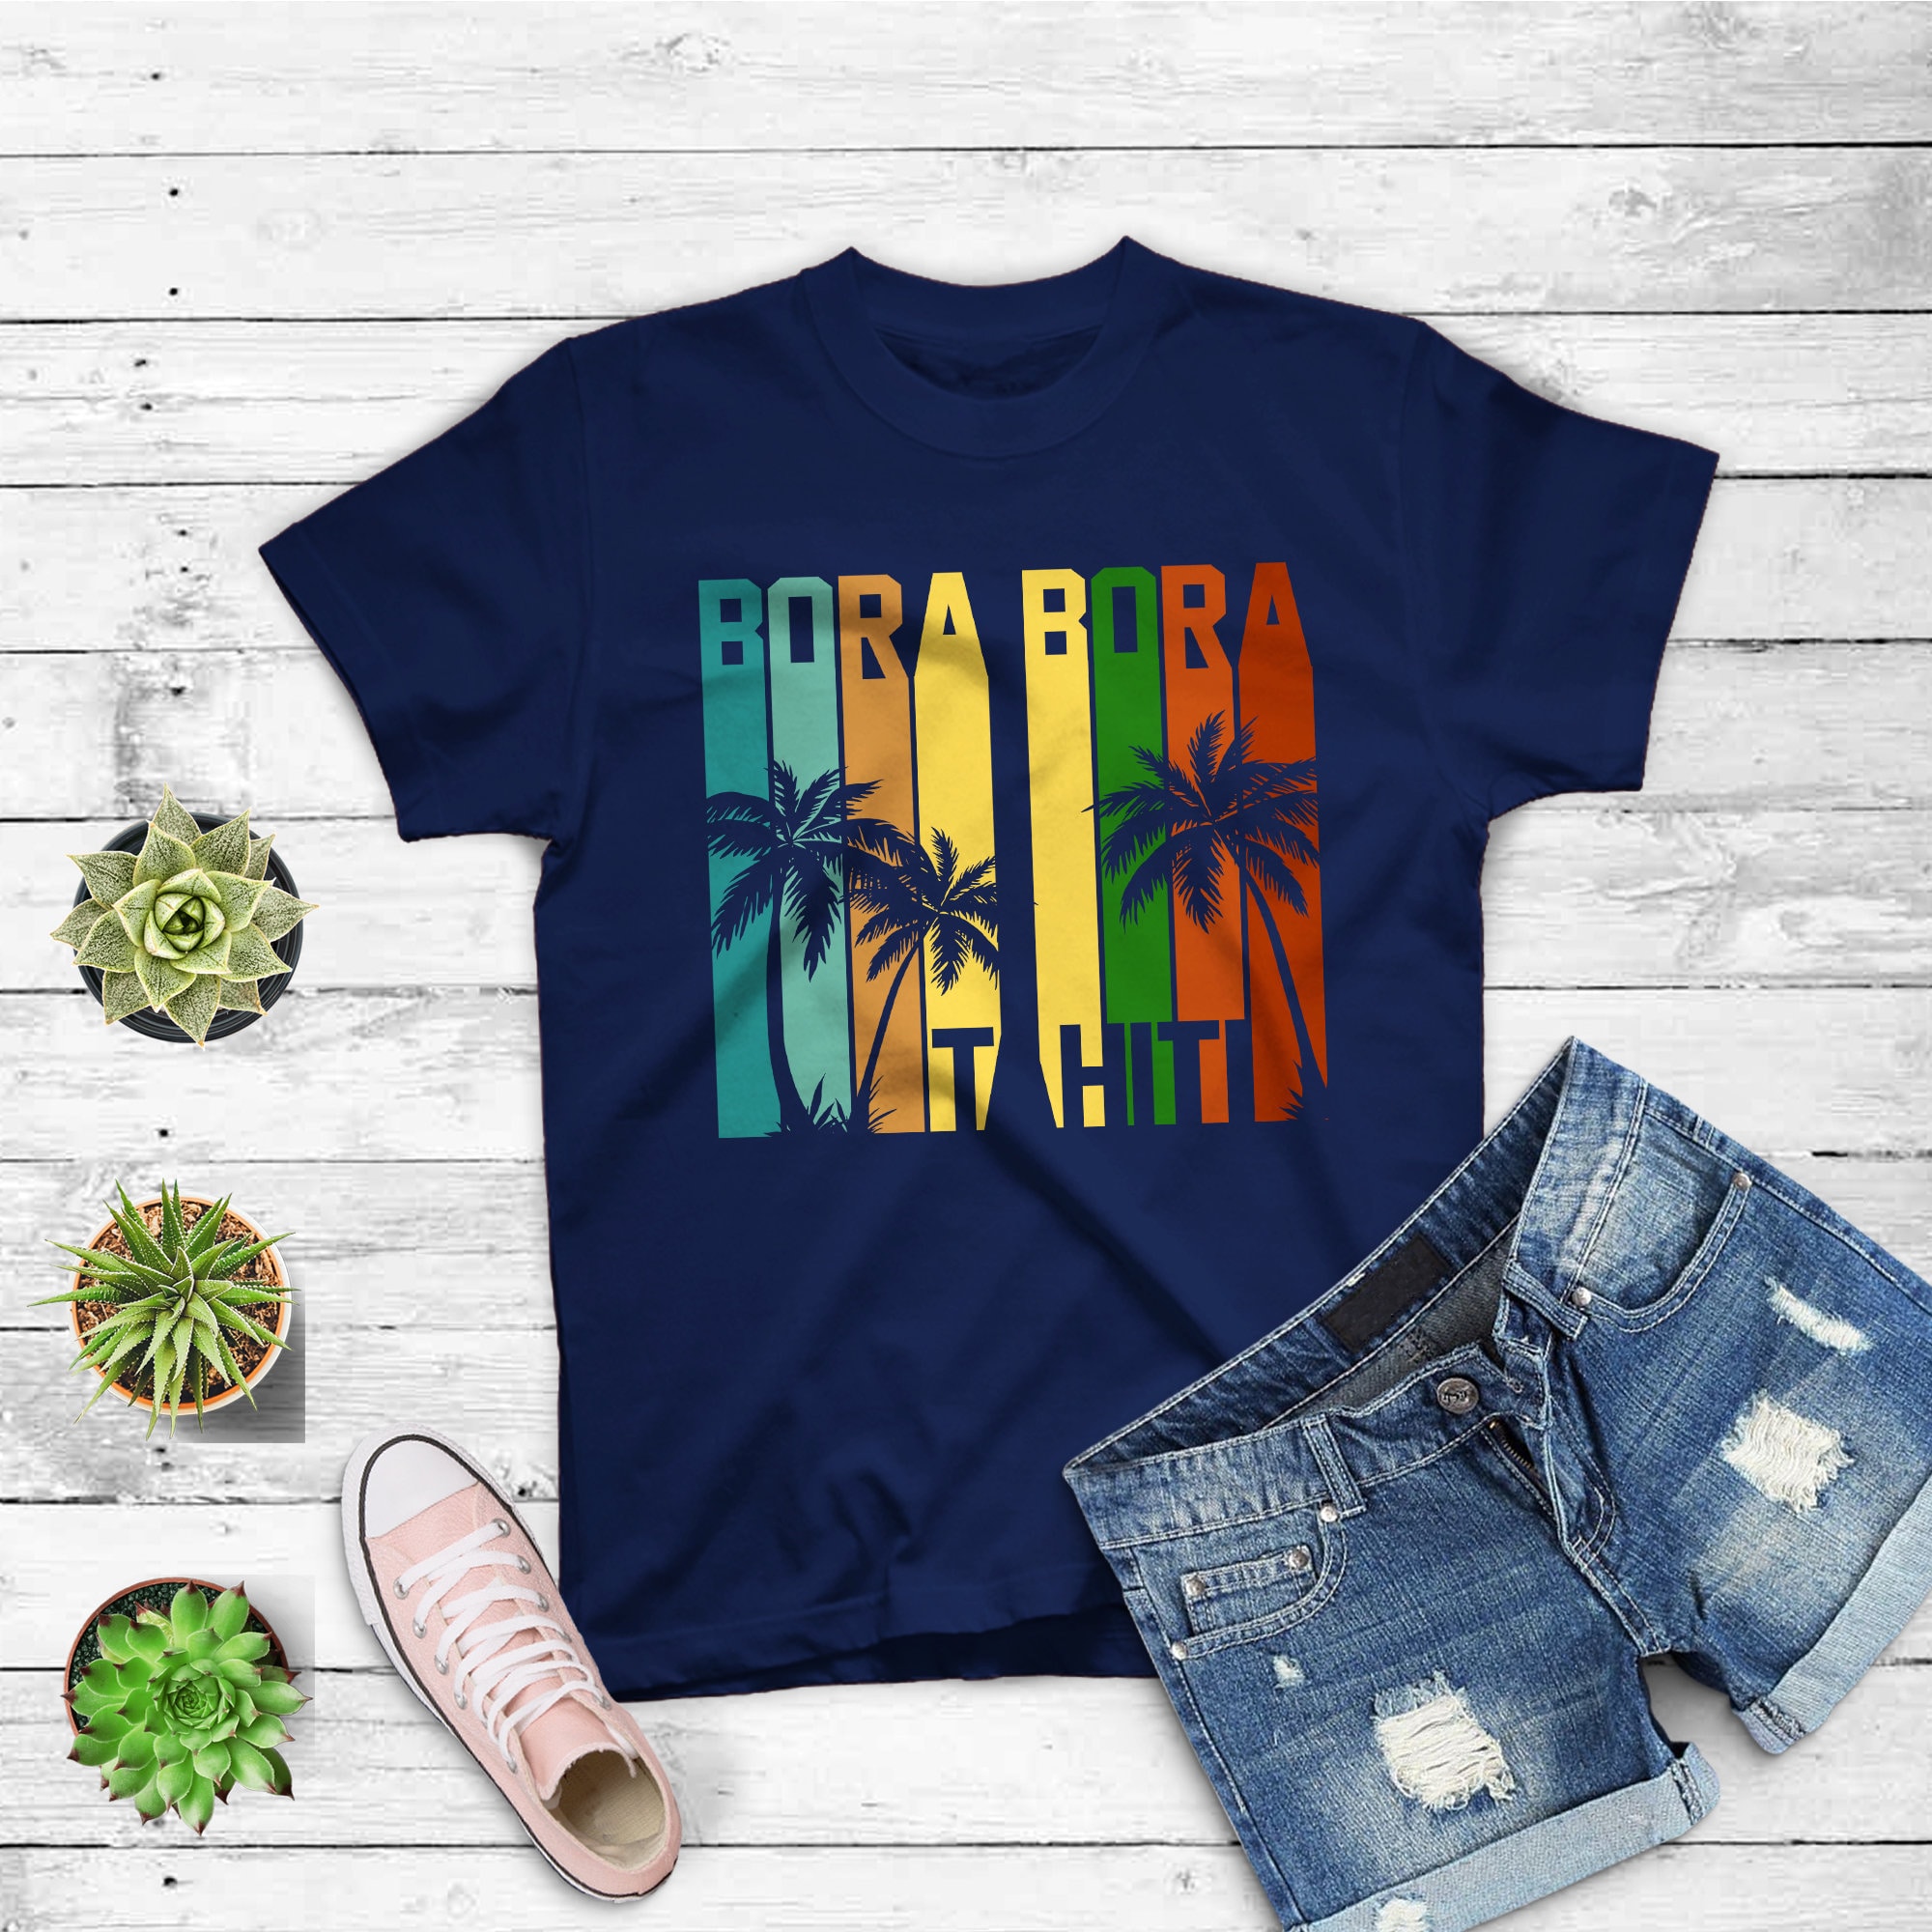 Bora Bora T Shirts - Etsy